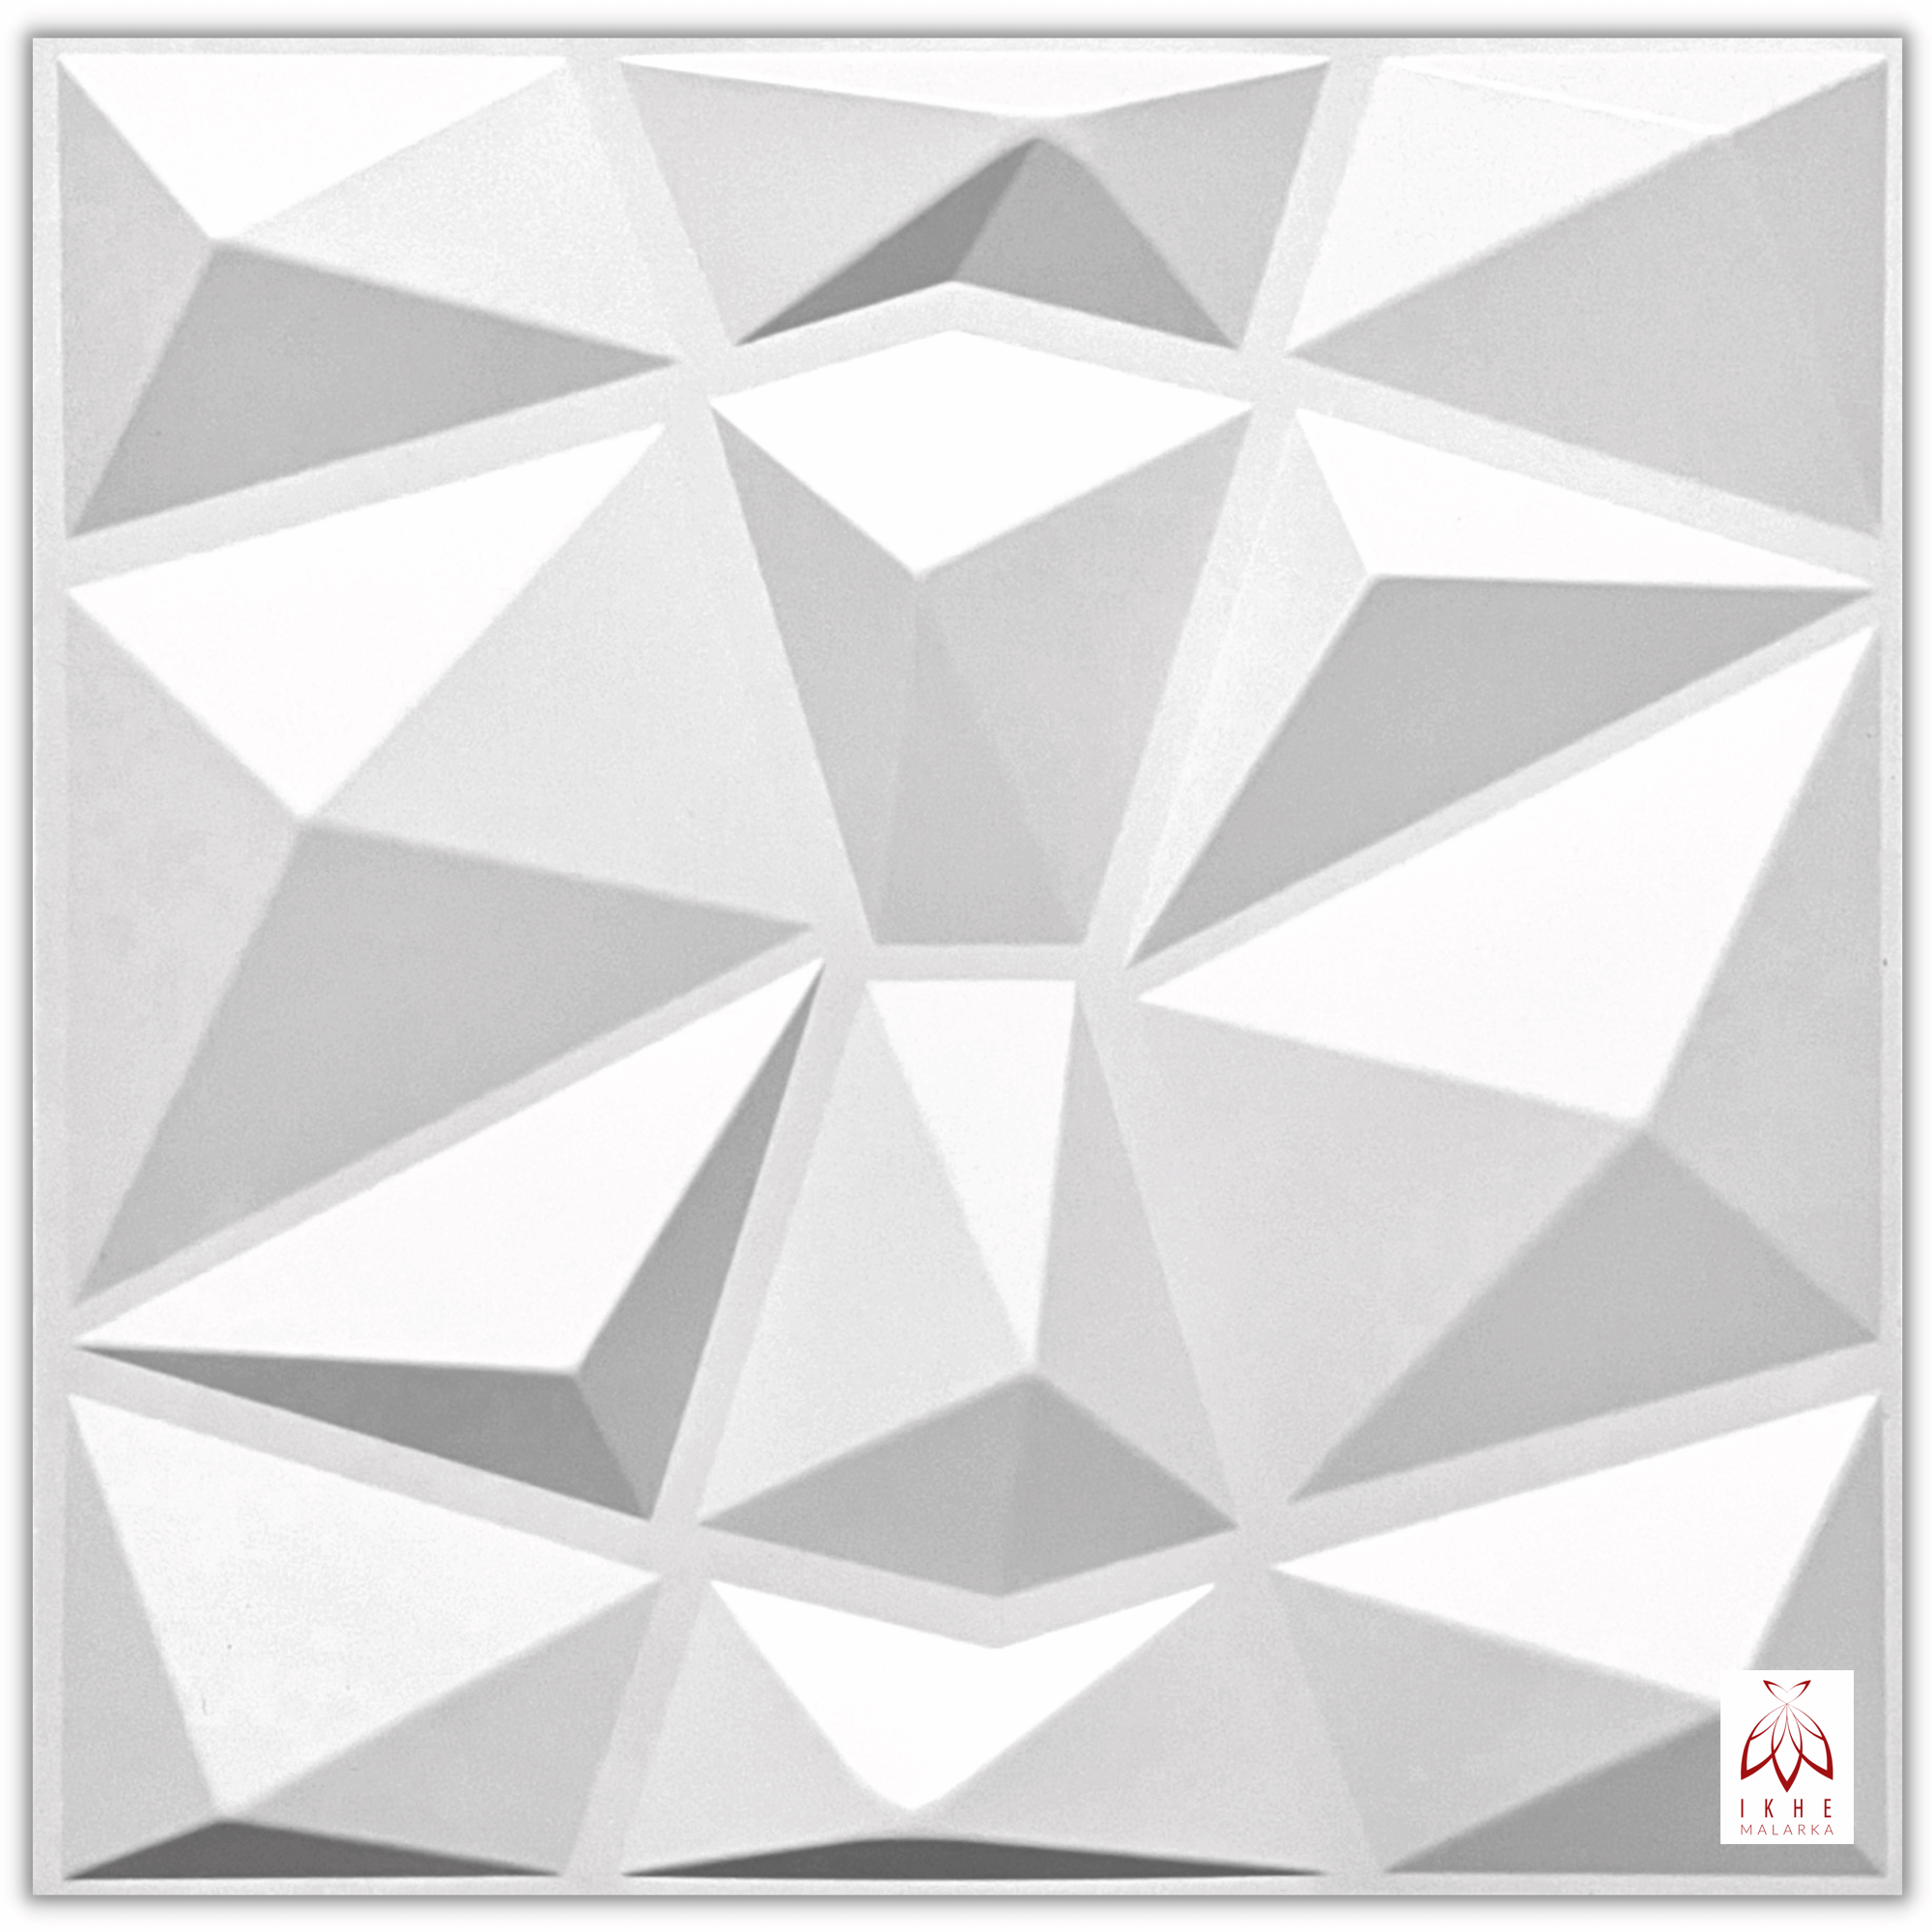 Panel 3D Mod. Diamond 50x50cm blanco. Presentación caja c/12pz